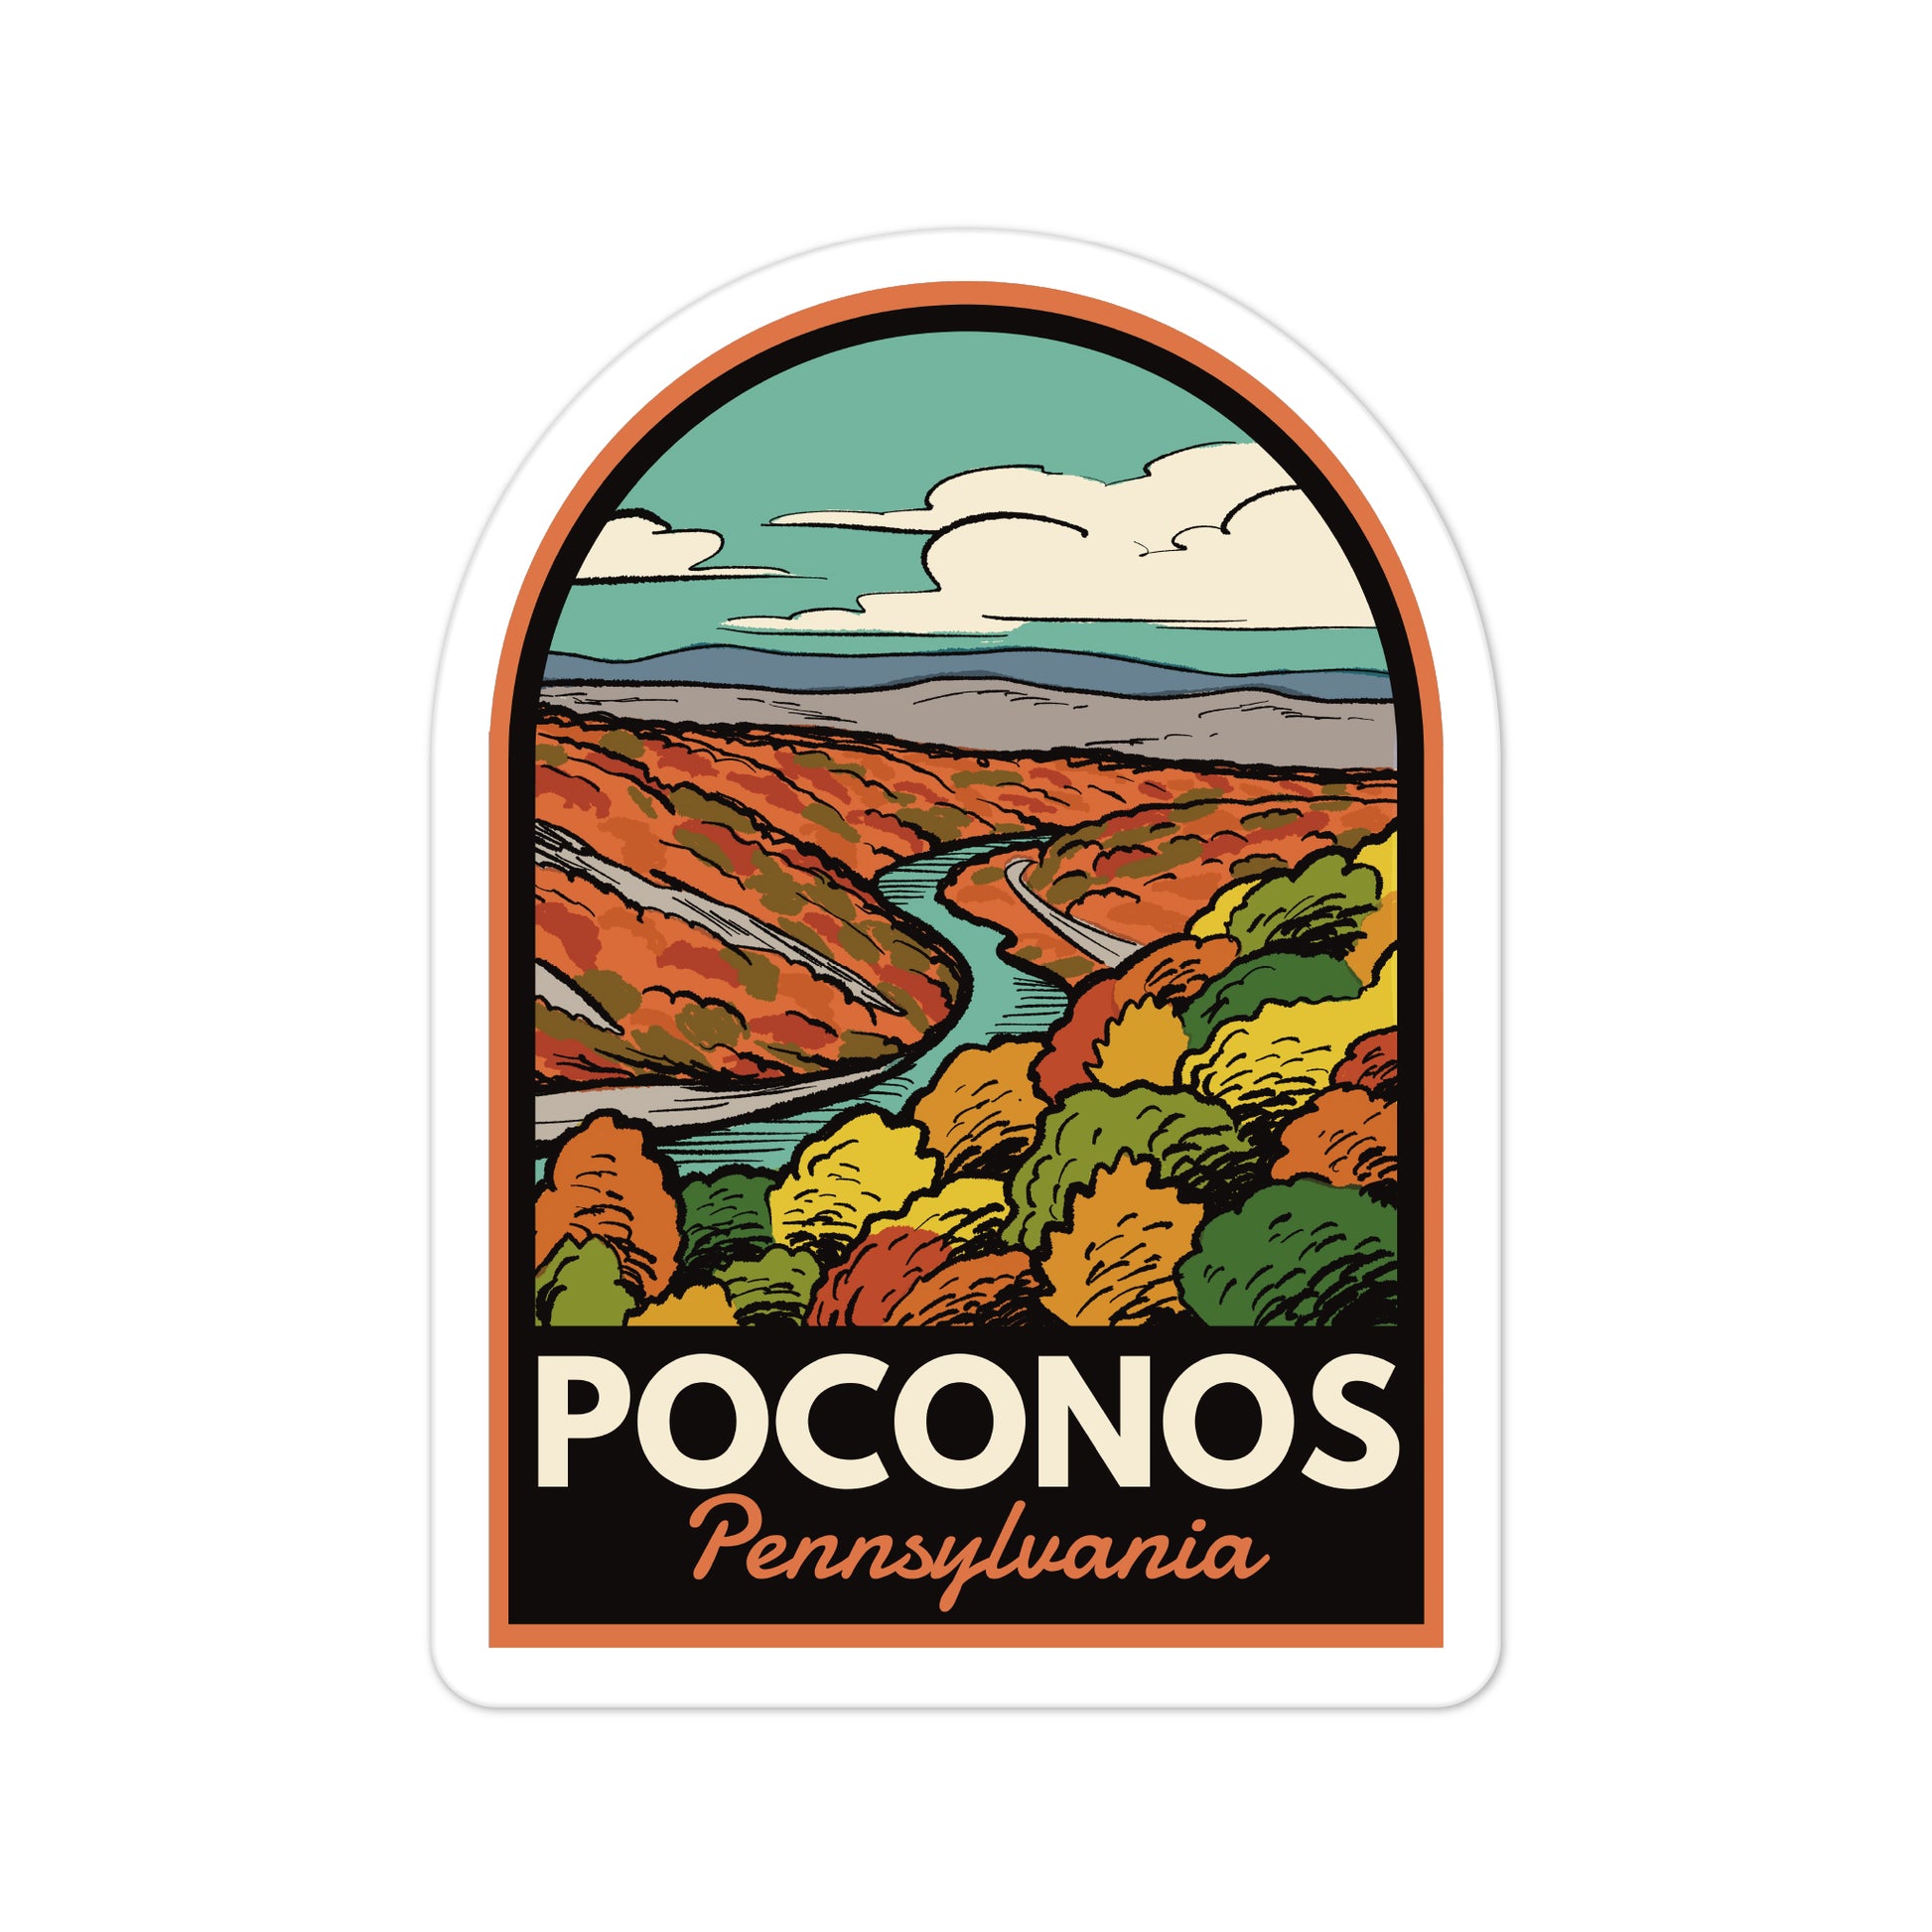 A sticker of Poconos Pennsylvania